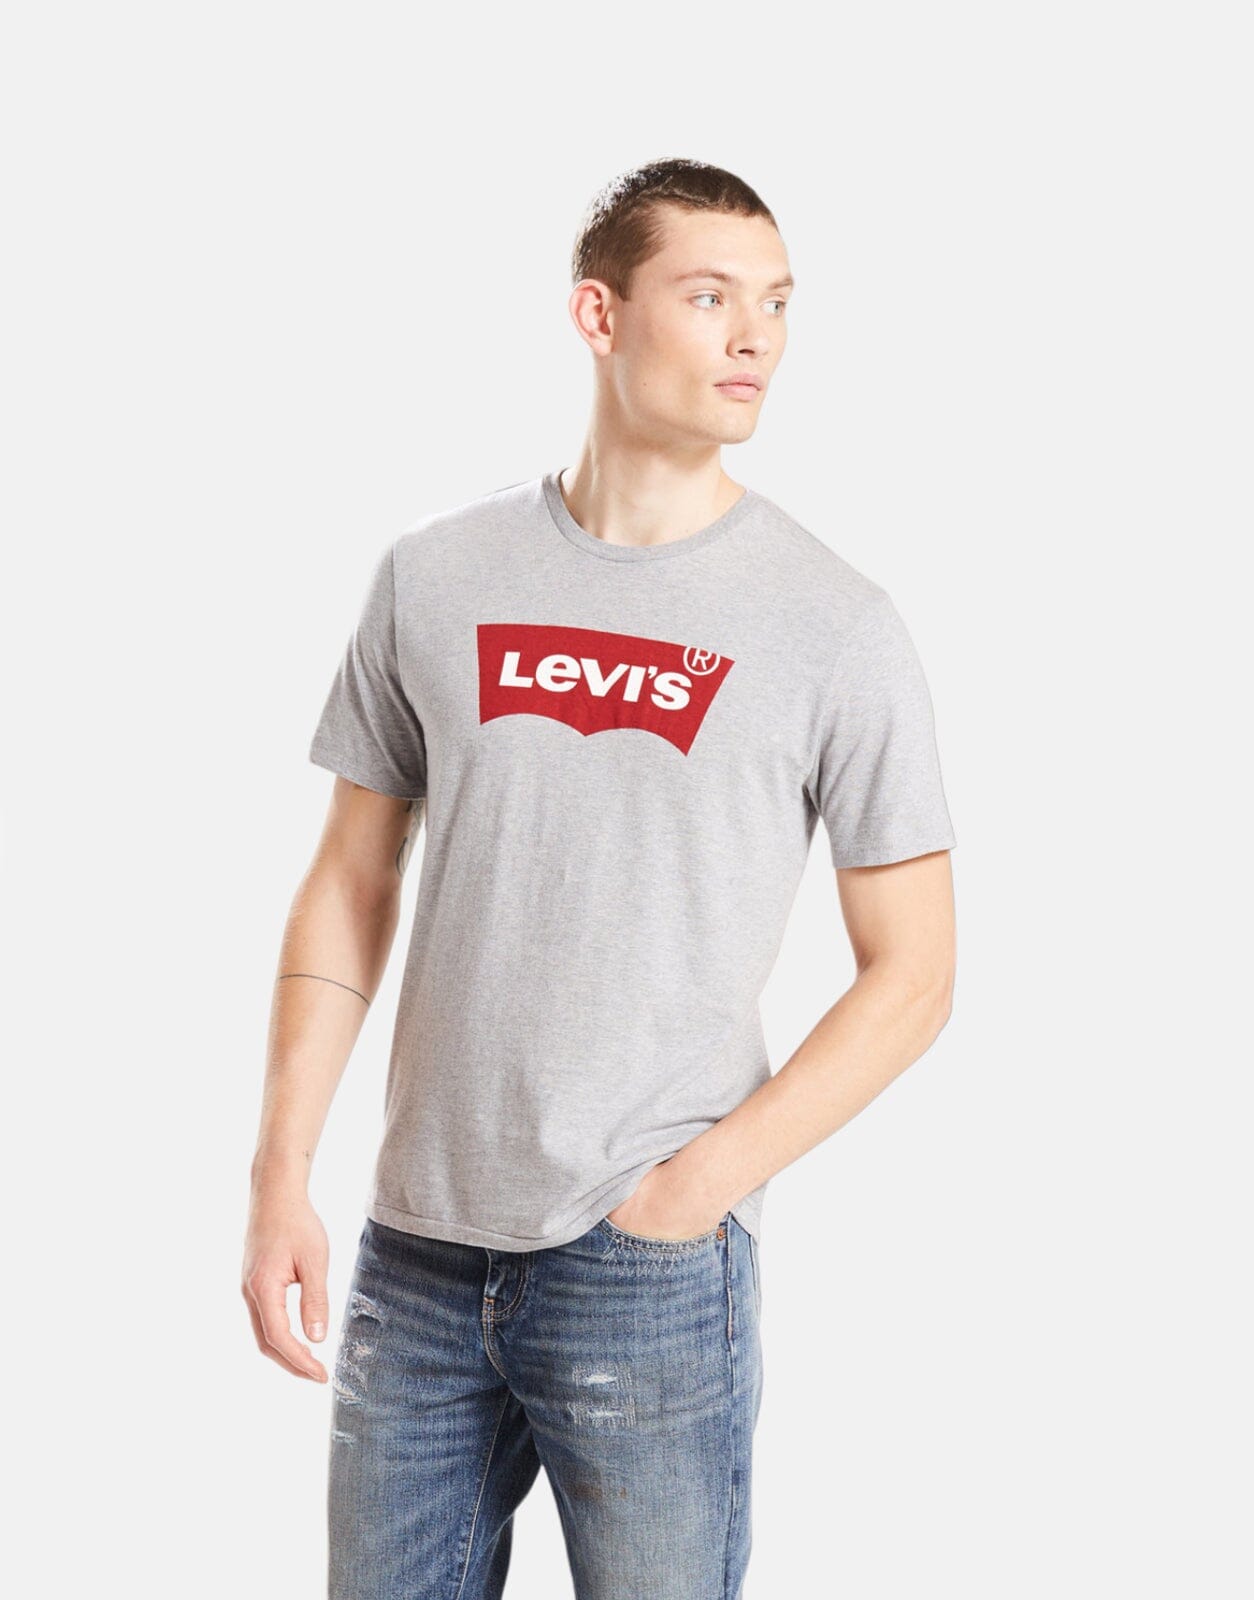 Levis Graphic Set in T-Shirt - Subwear